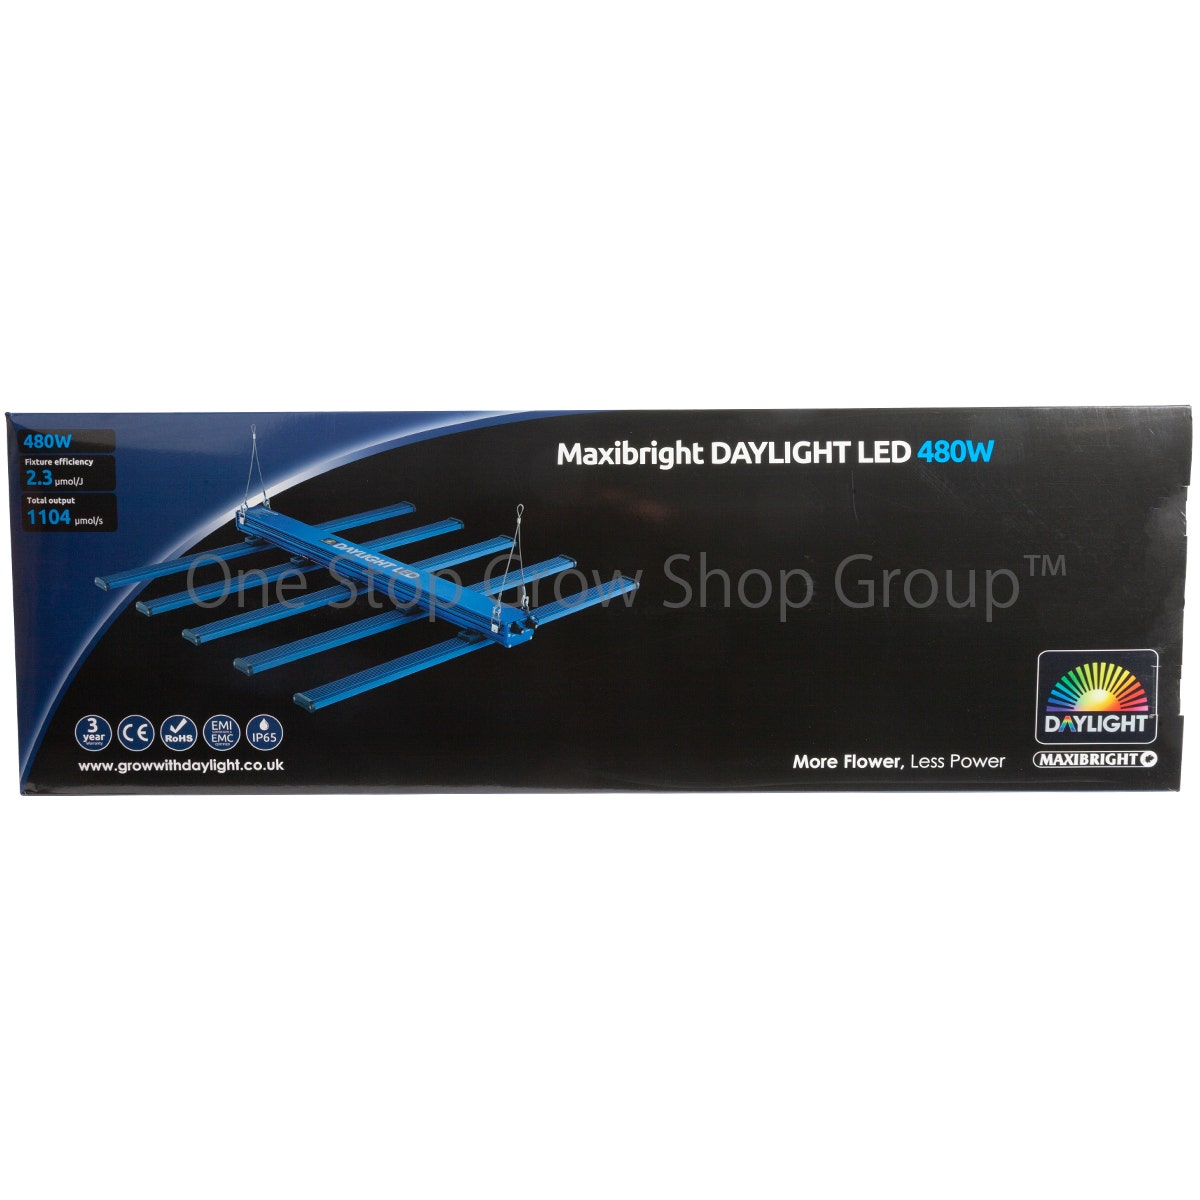 Maxibright Daylight LED 480w Grow Light